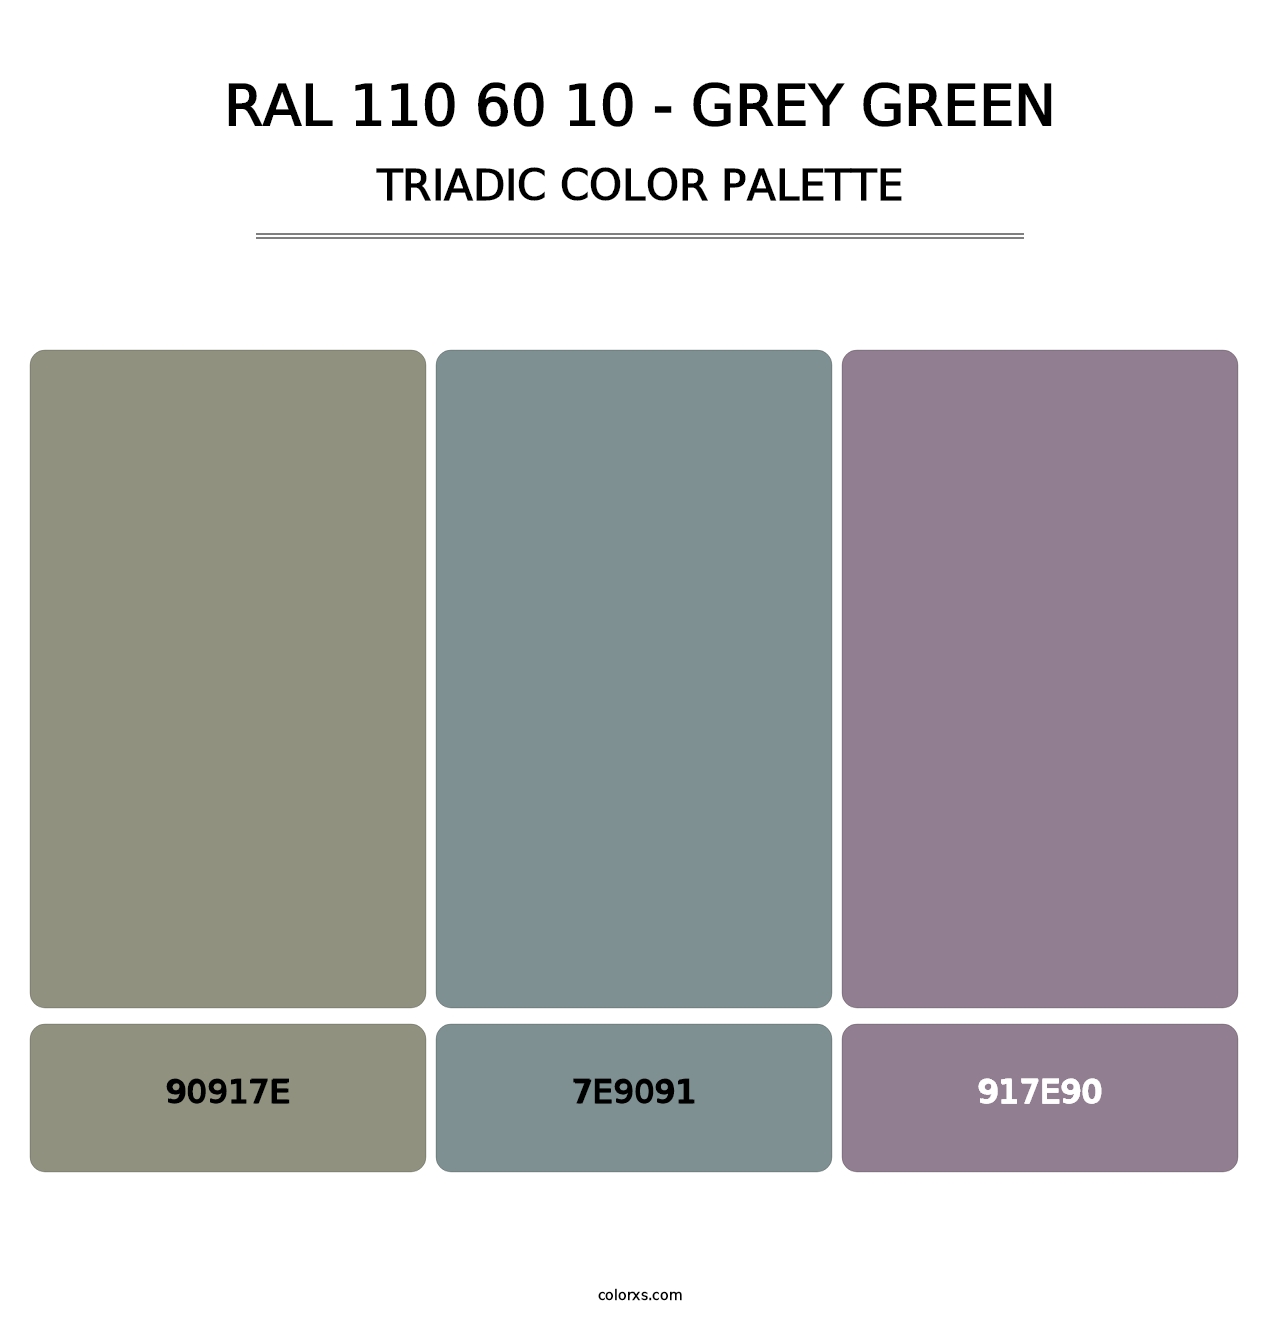 RAL 110 60 10 - Grey Green - Triadic Color Palette